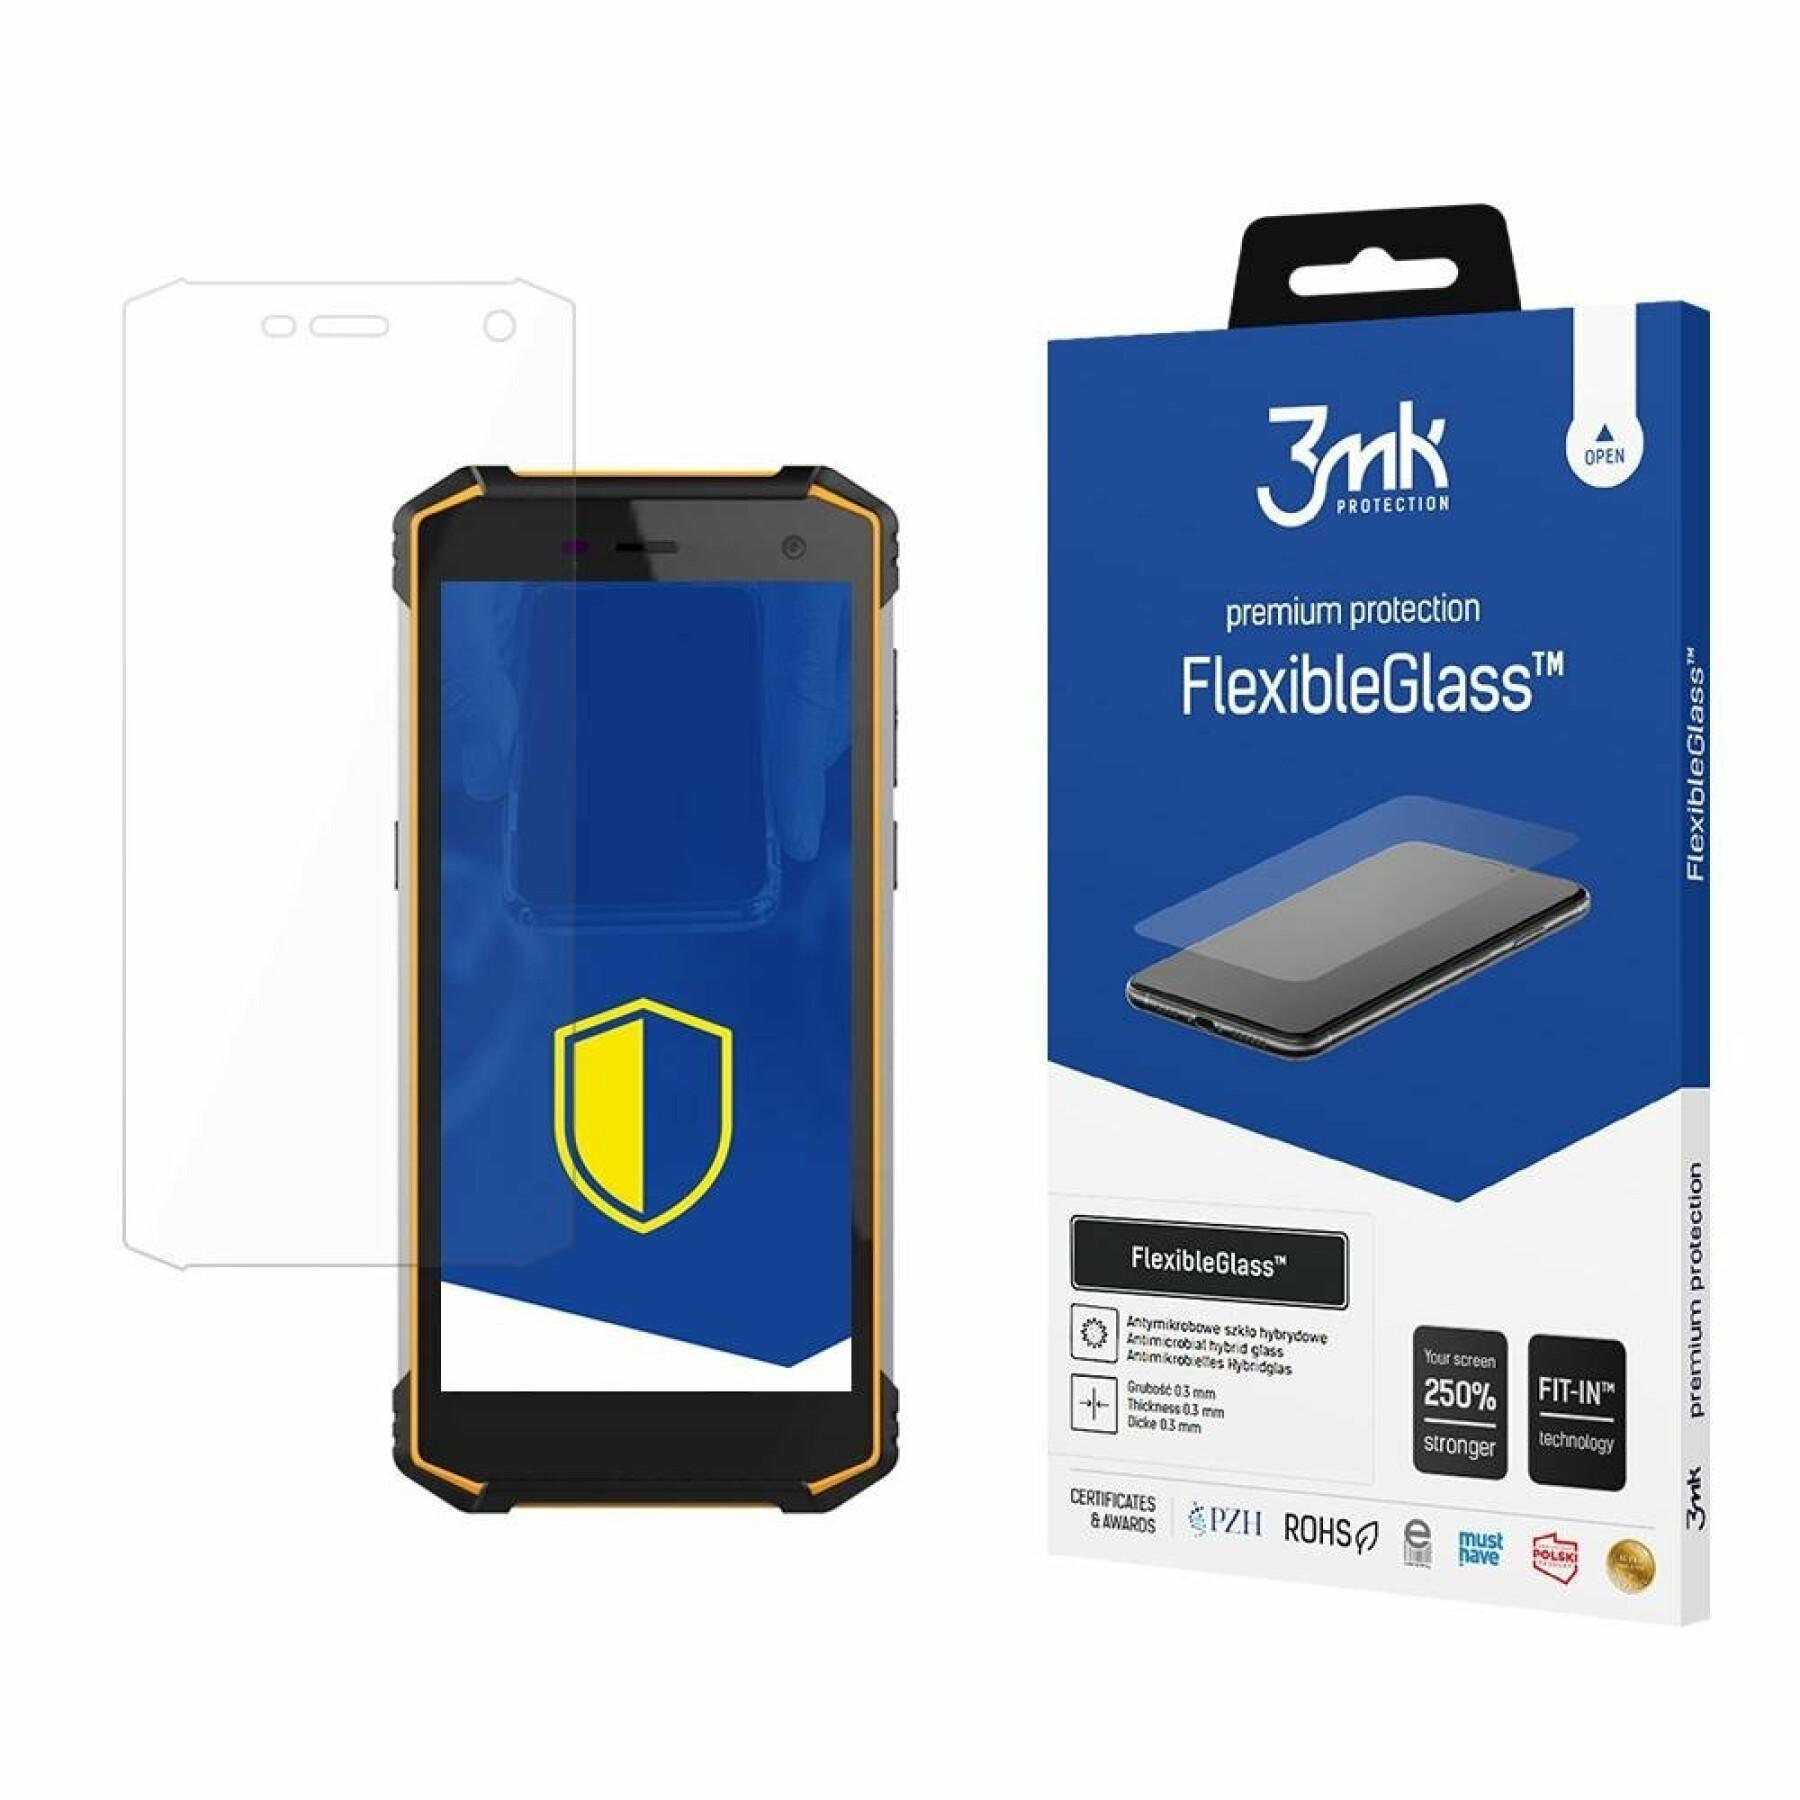 Vidrio híbrido 3MK MyPhone Hammer Energy 2 - FlexibeGlass™